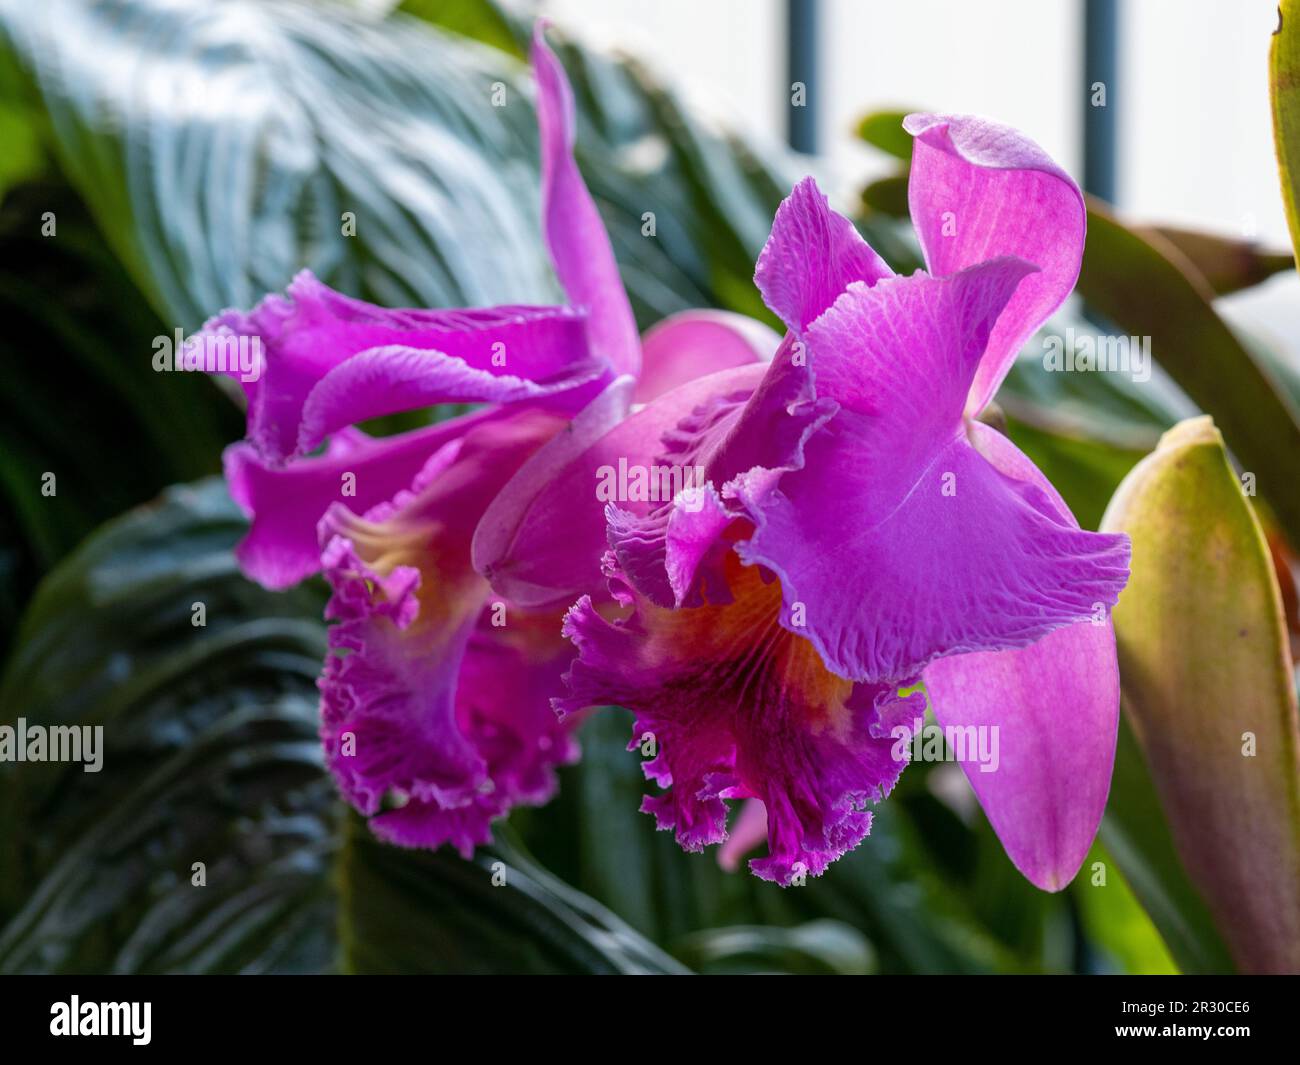 Cattleya orchid flowers, pink blooms, subtropical coastal Australian garden Stock Photo